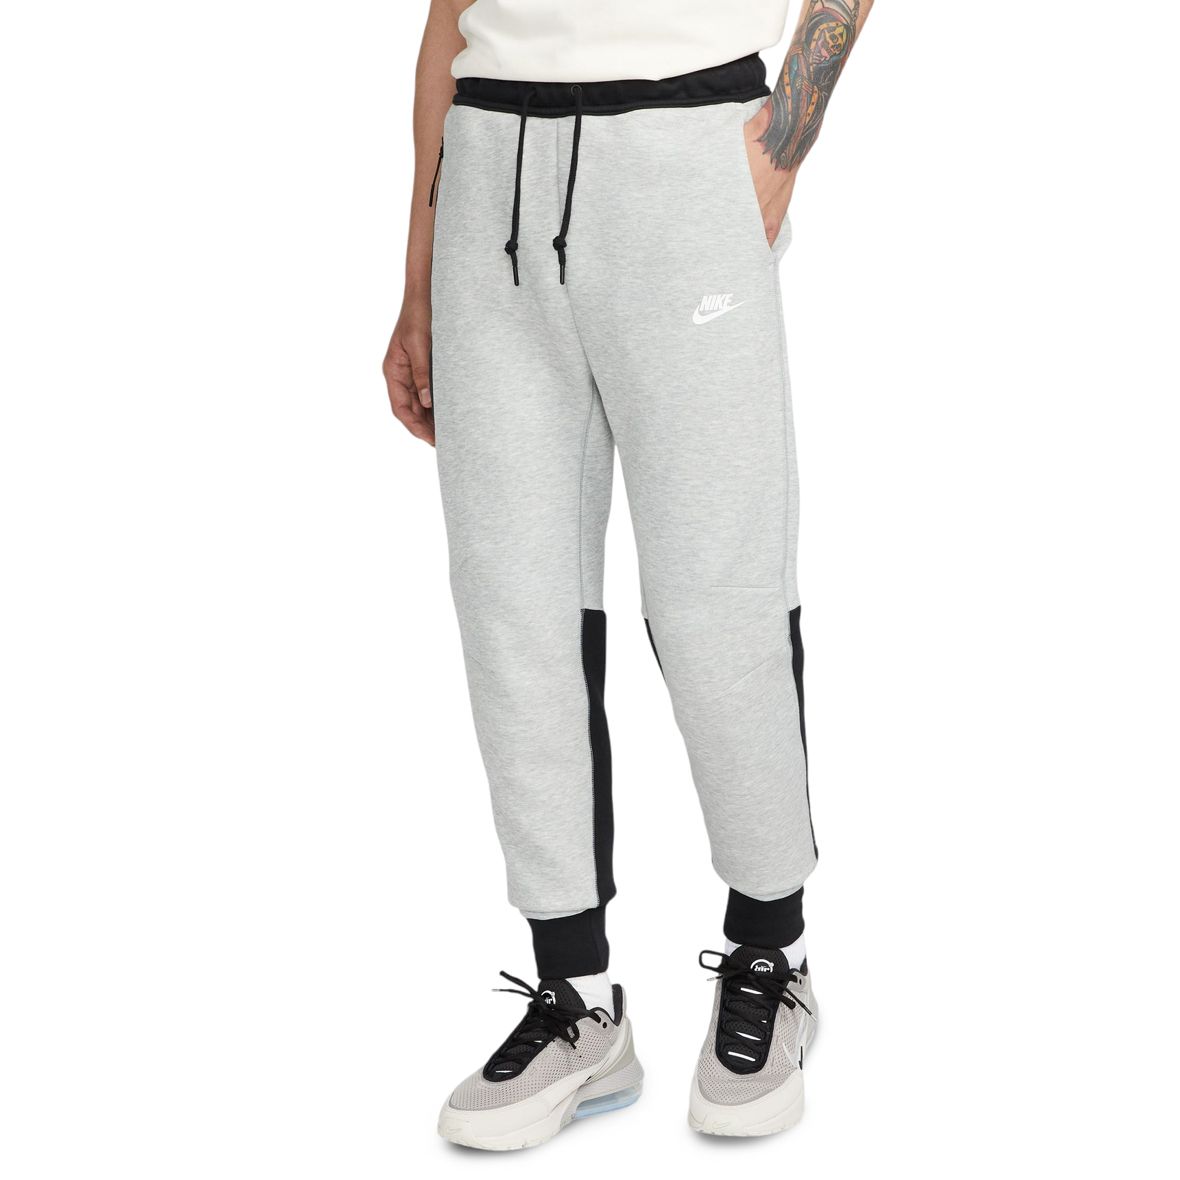 Nike Tech Fleece Joggers (Size L)  Nike tech fleece, Fleece joggers,  Clothes design